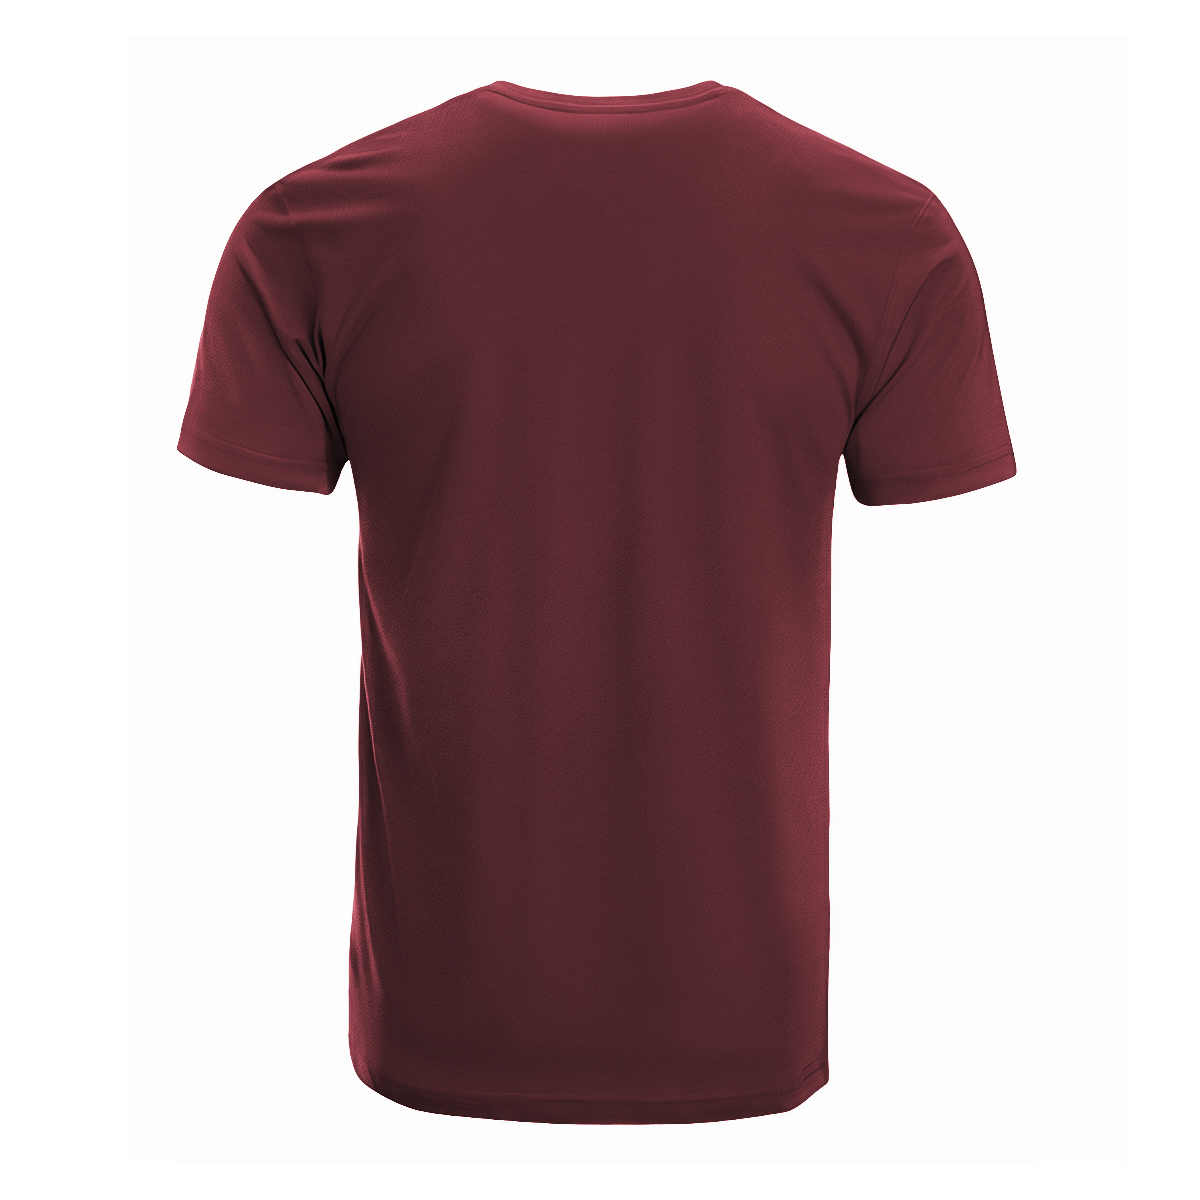 Rait Tartan Crest T-shirt - I'm not yelling style